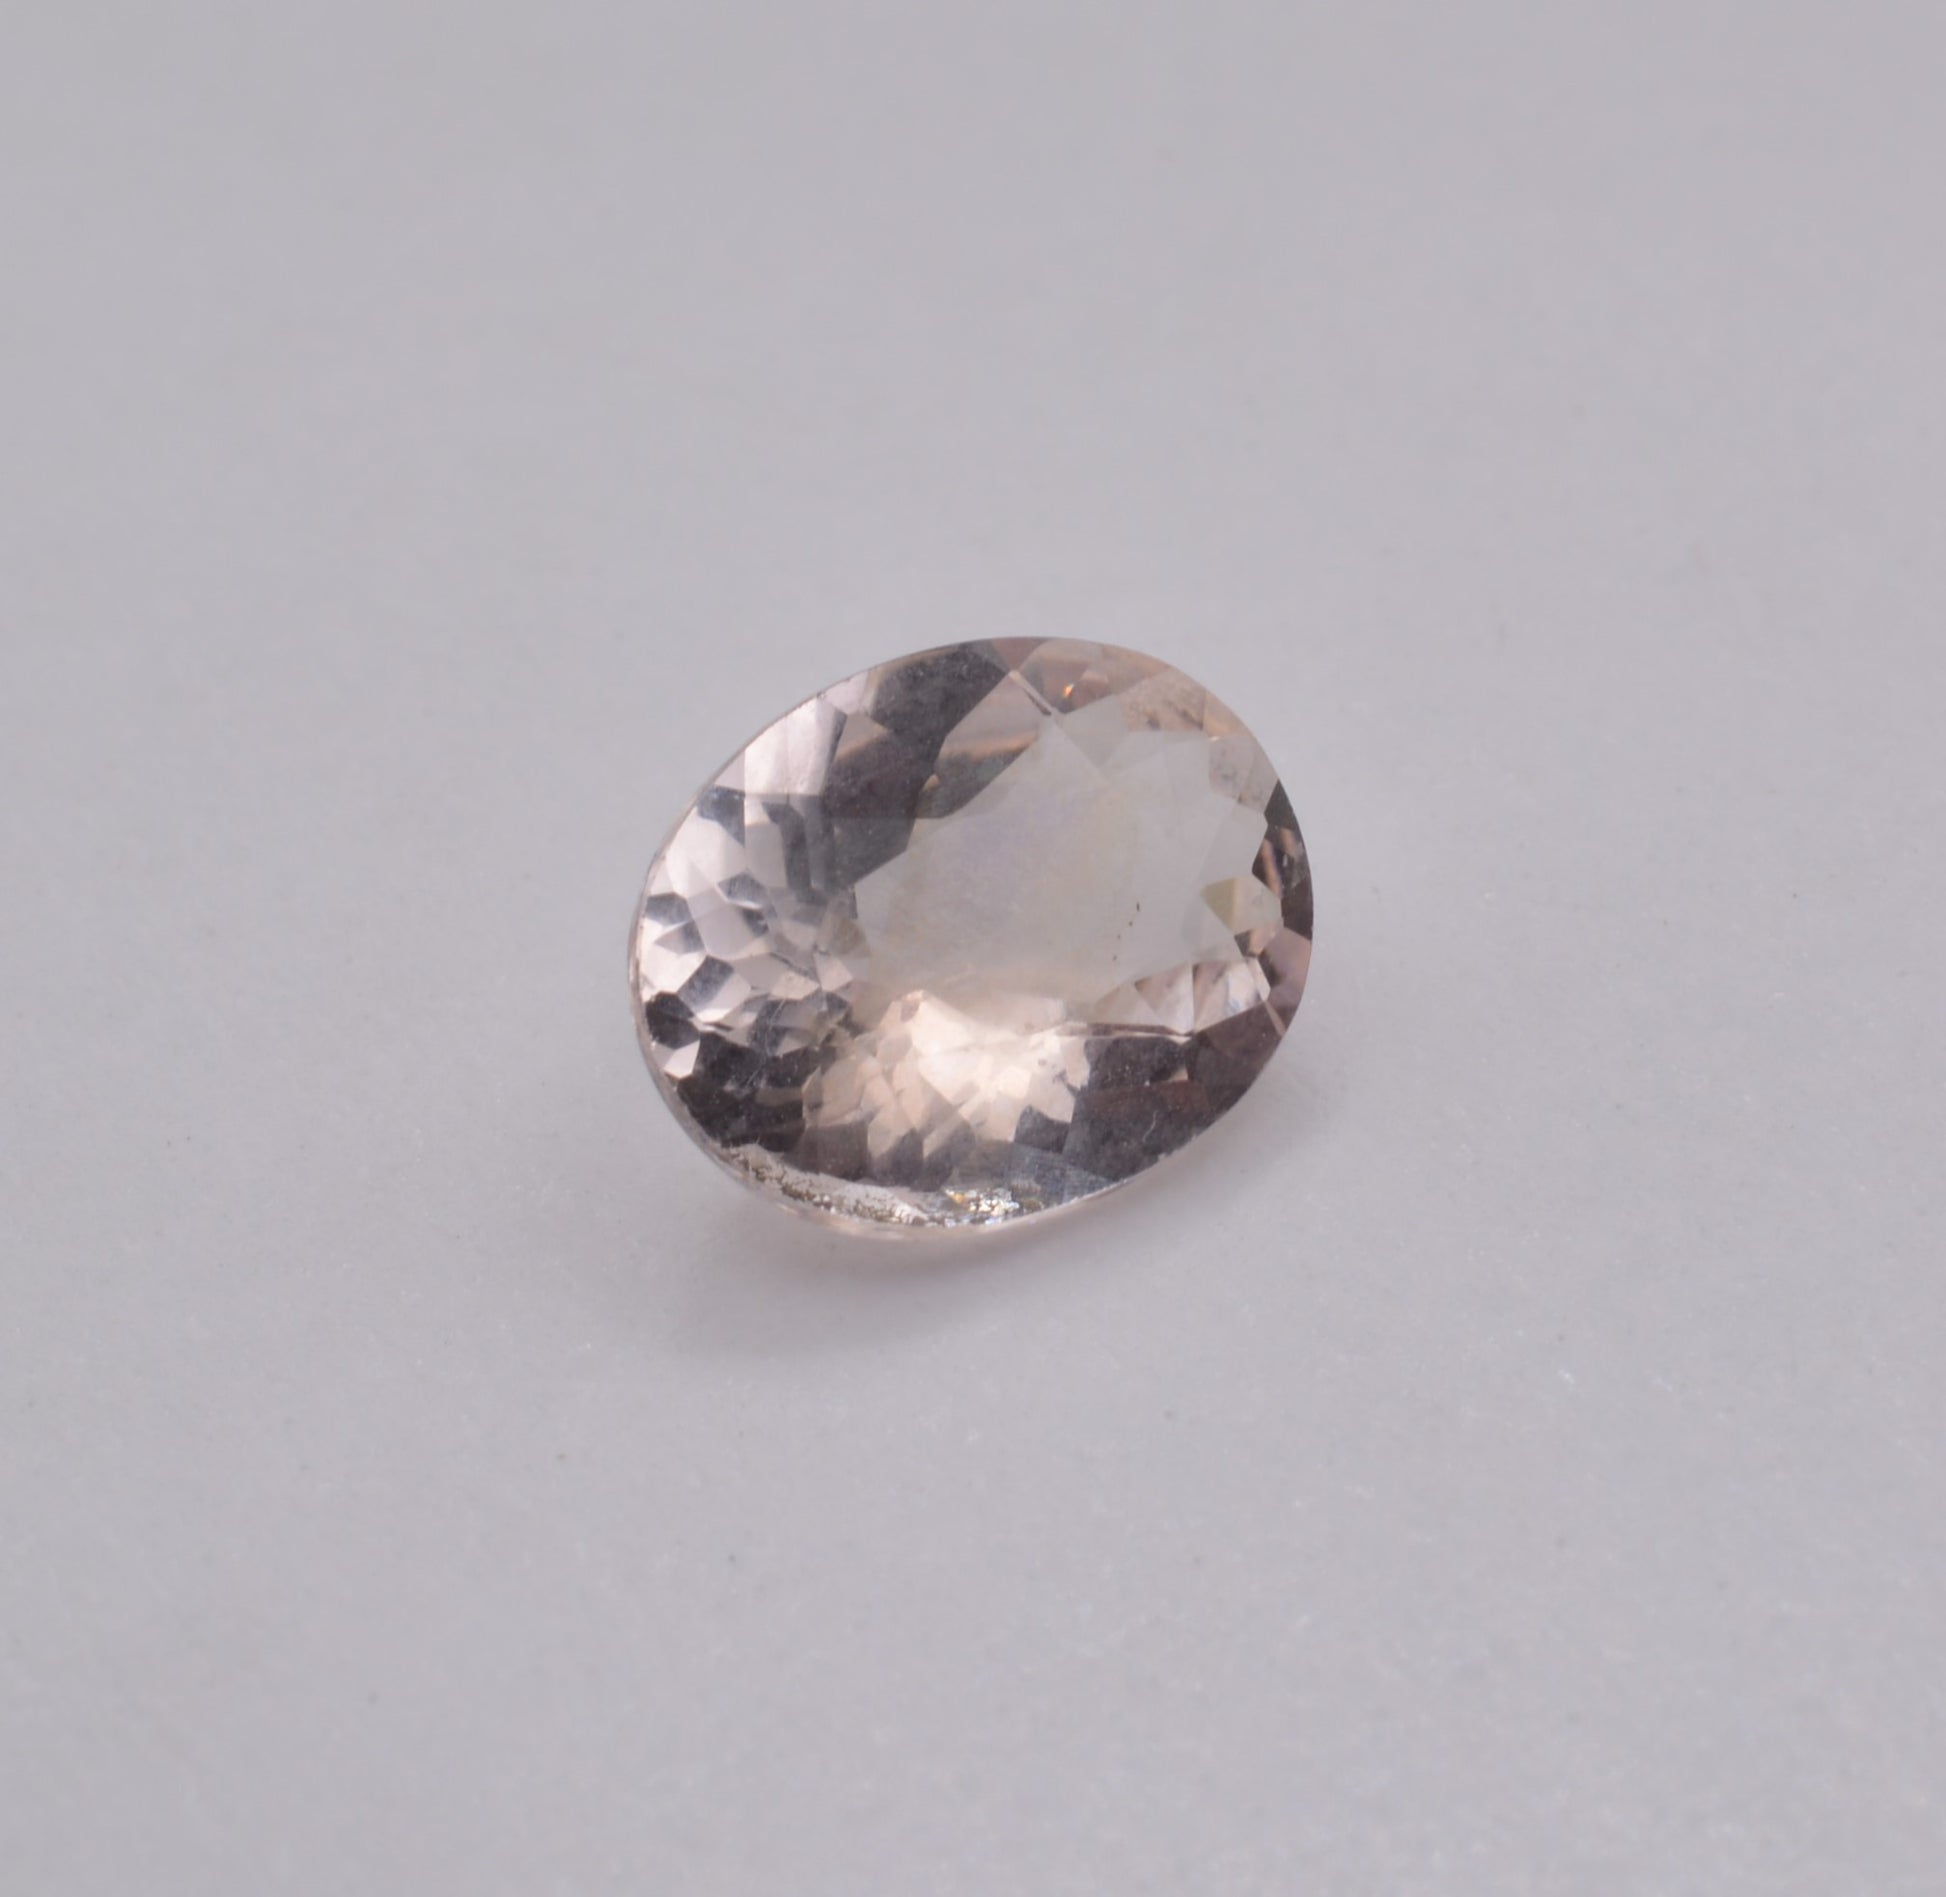 Morganite ovale 1,88ct - pierre précieuse - gemme